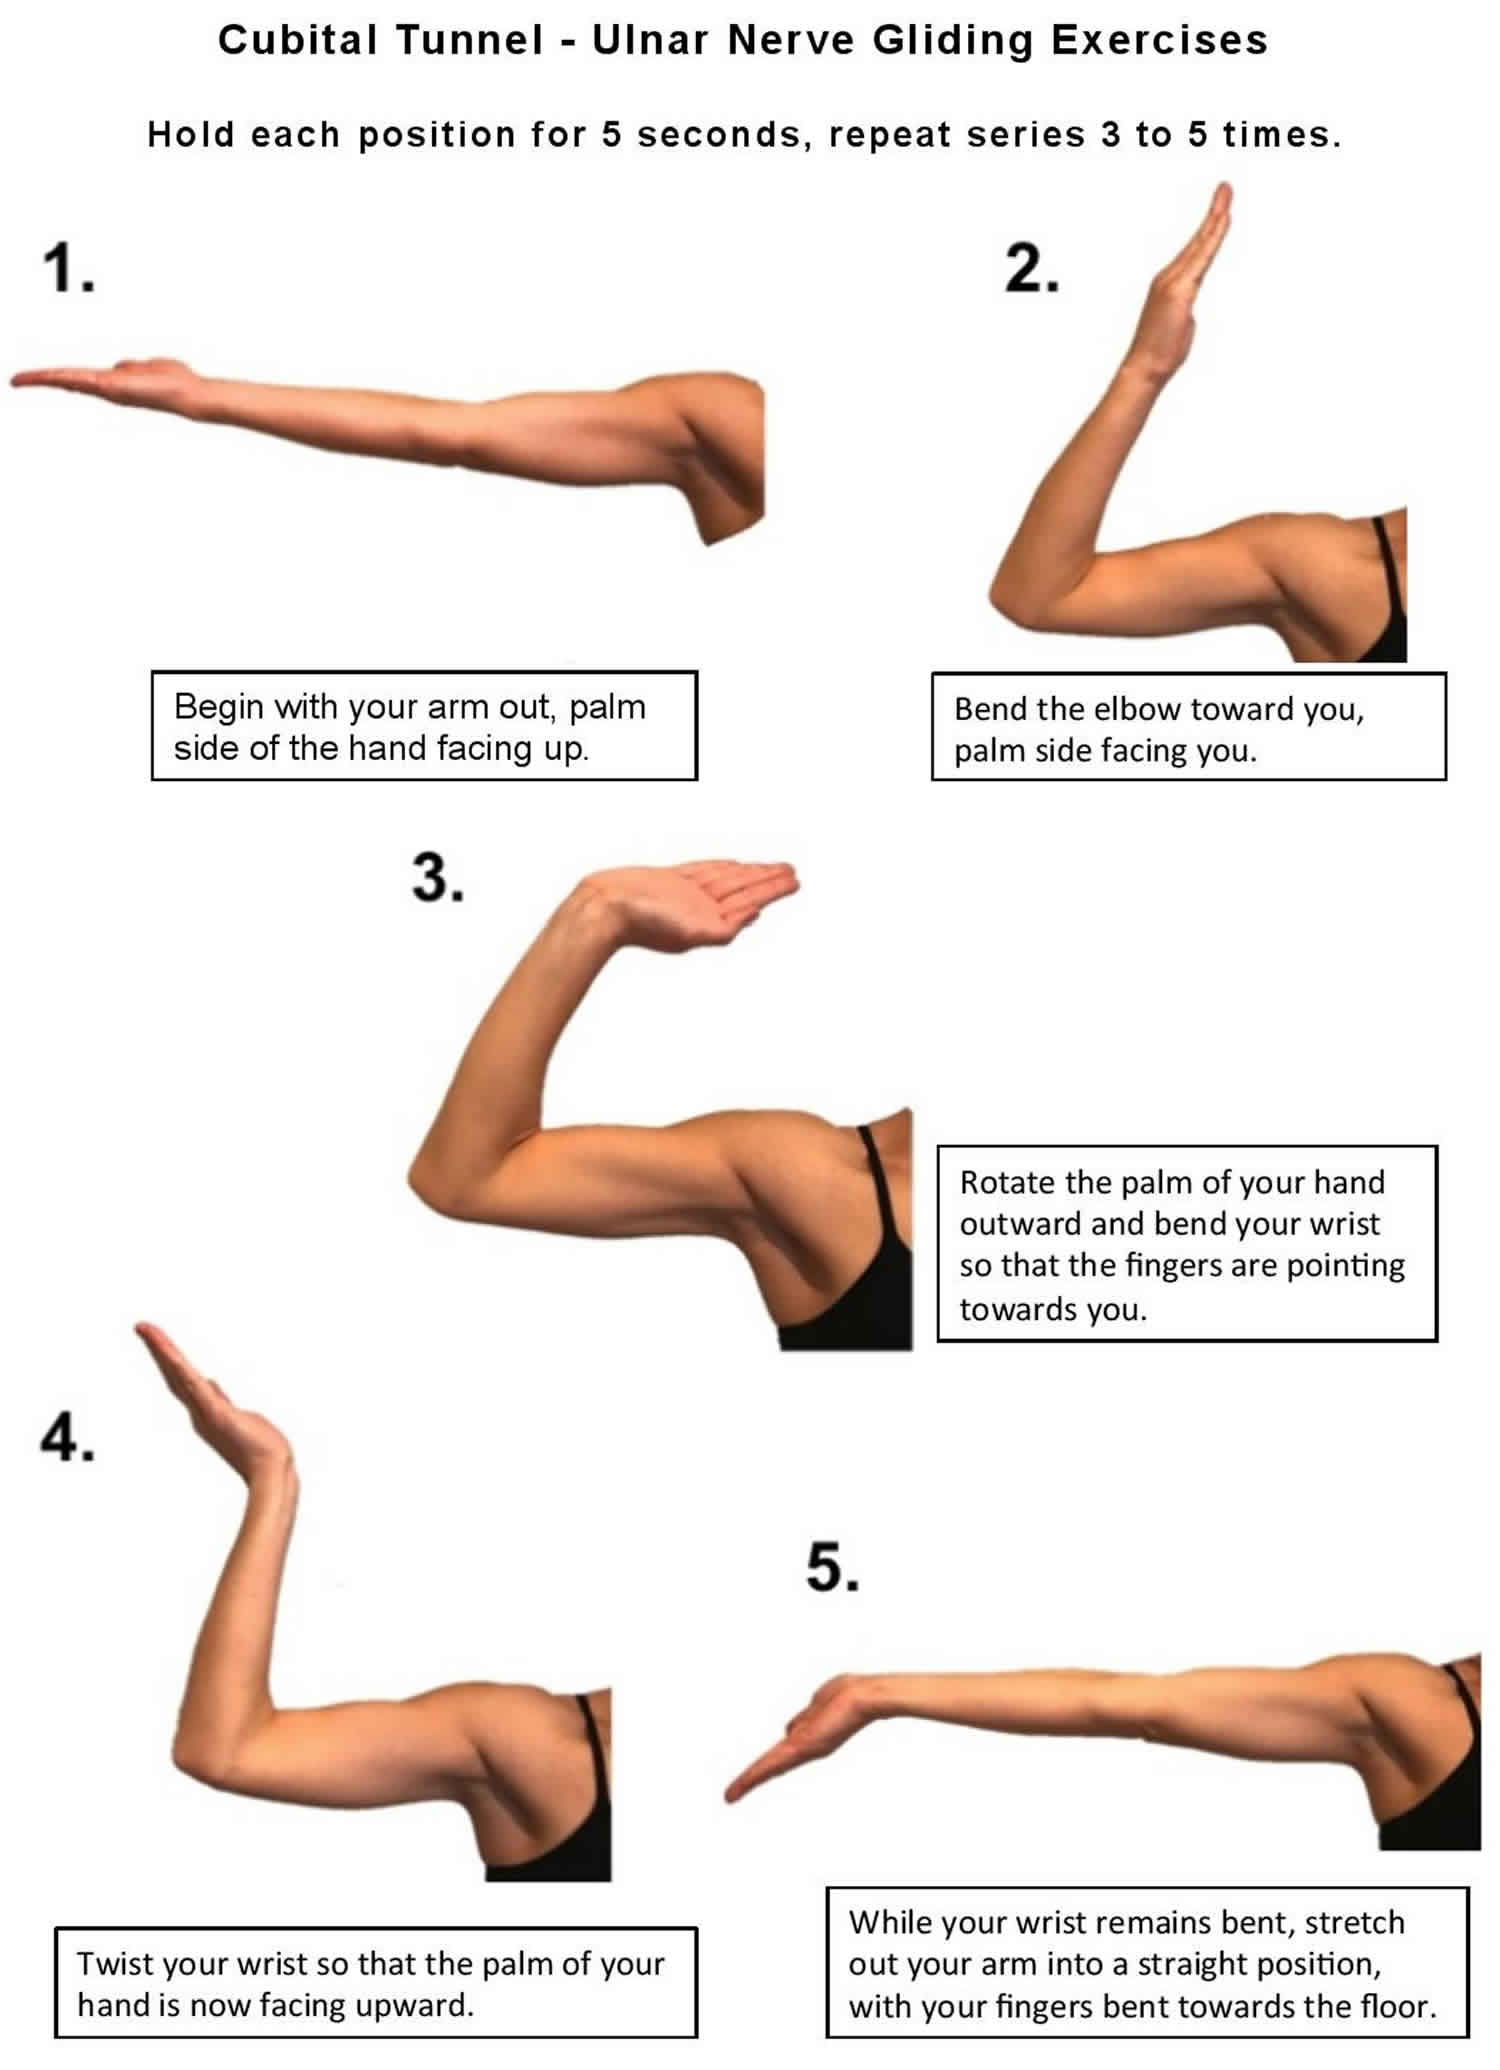 Ulnar nerve entrapment exercises